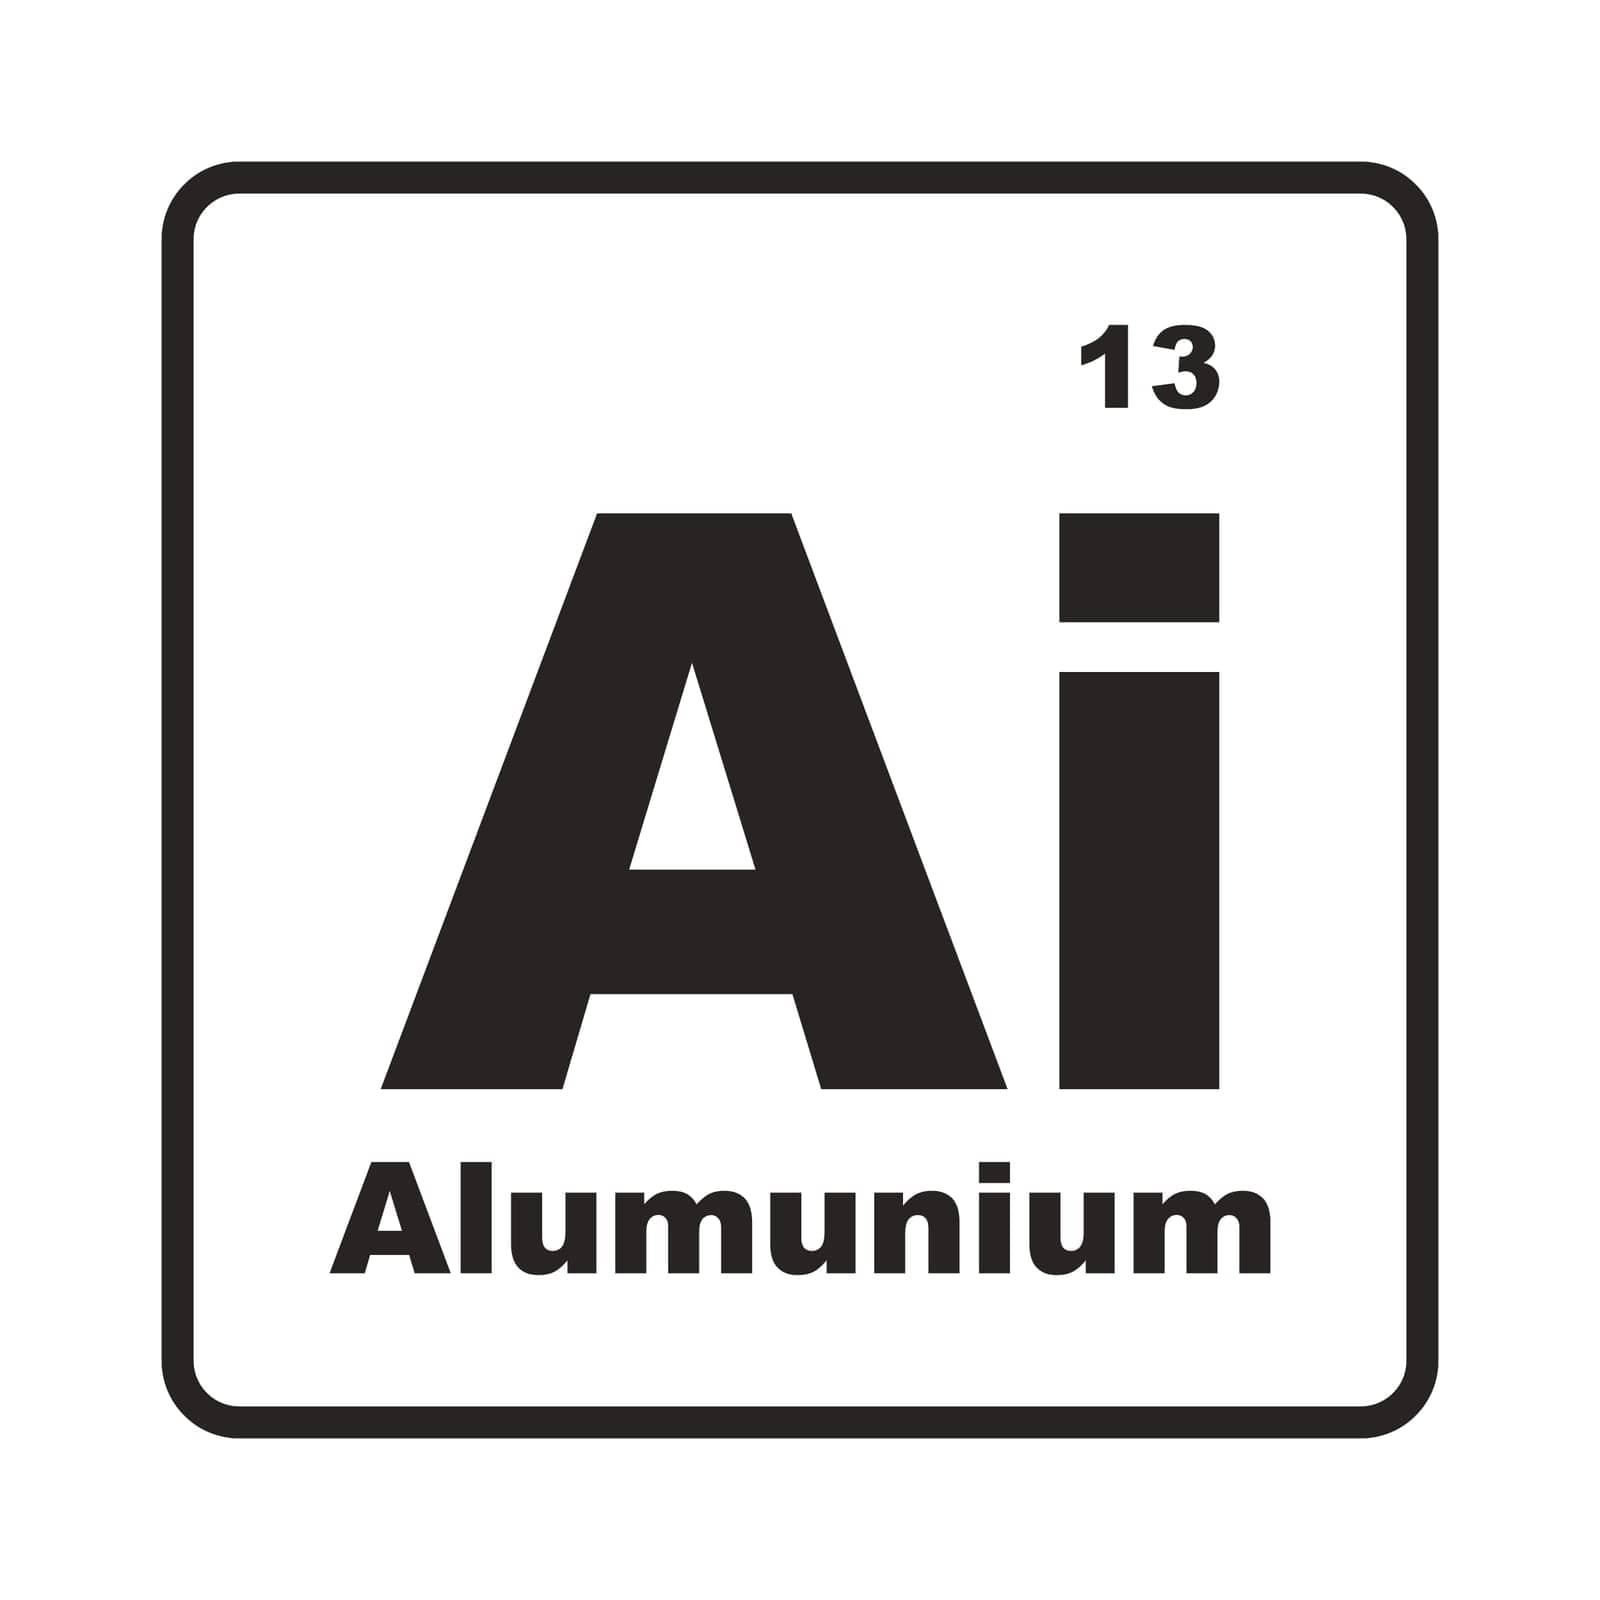 Alumunium element icon by rnking